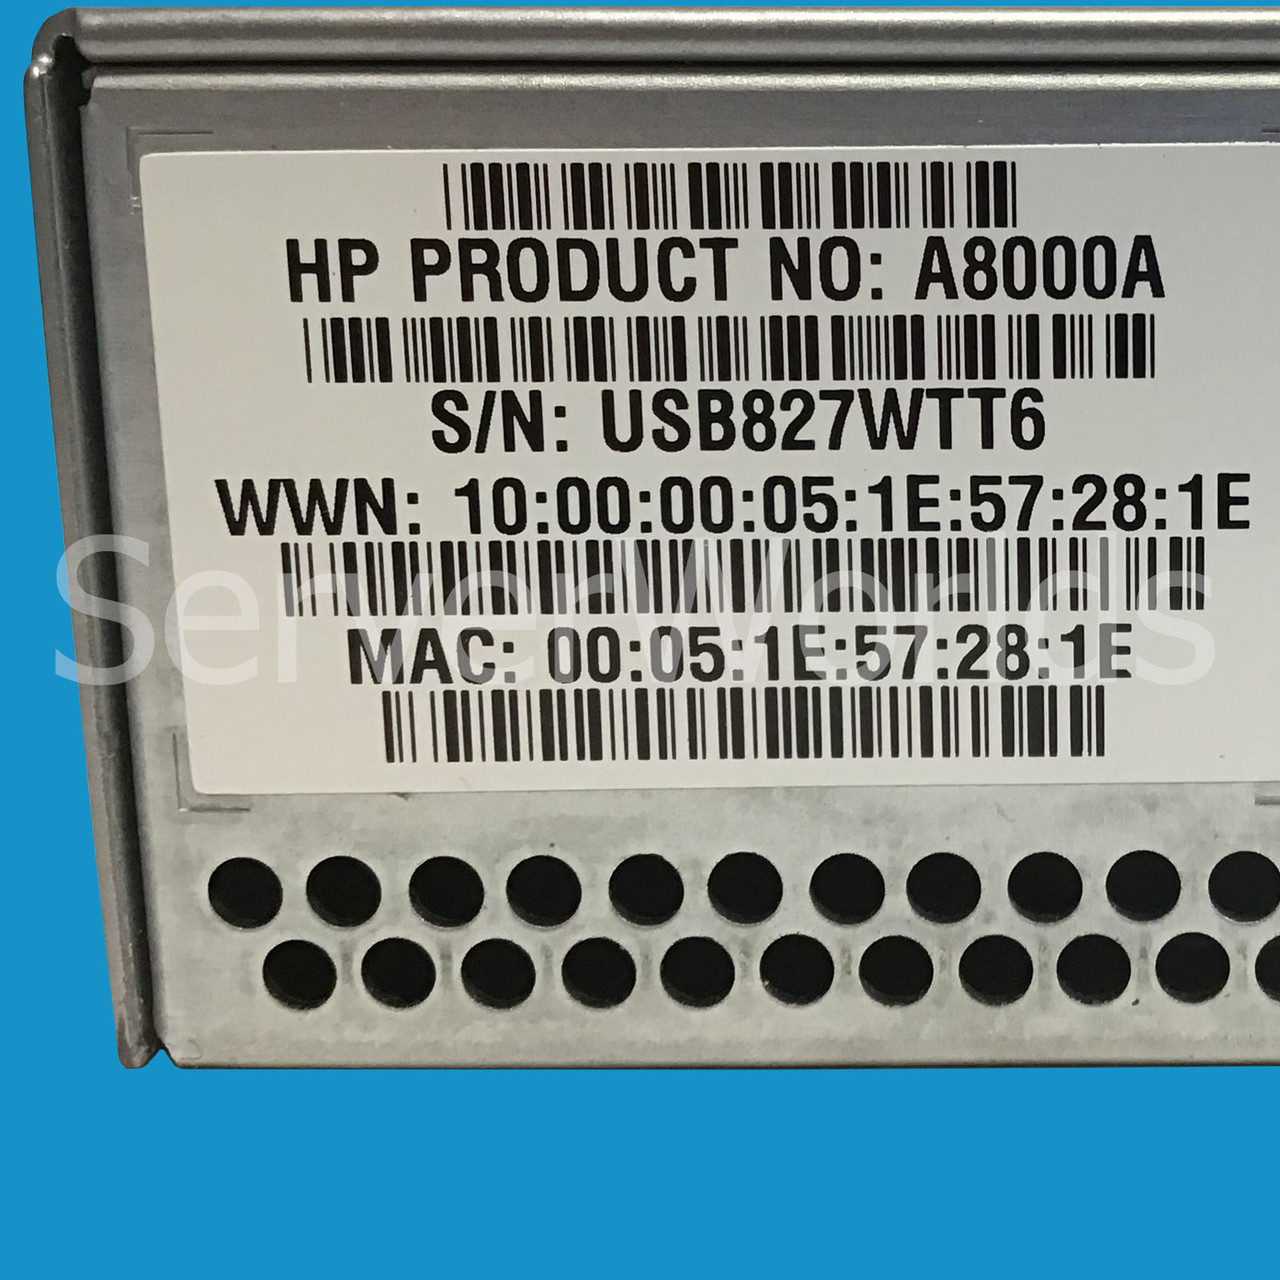 HPe A8000A Storageworks 4/8 SAN switch 411839-001 393750-001